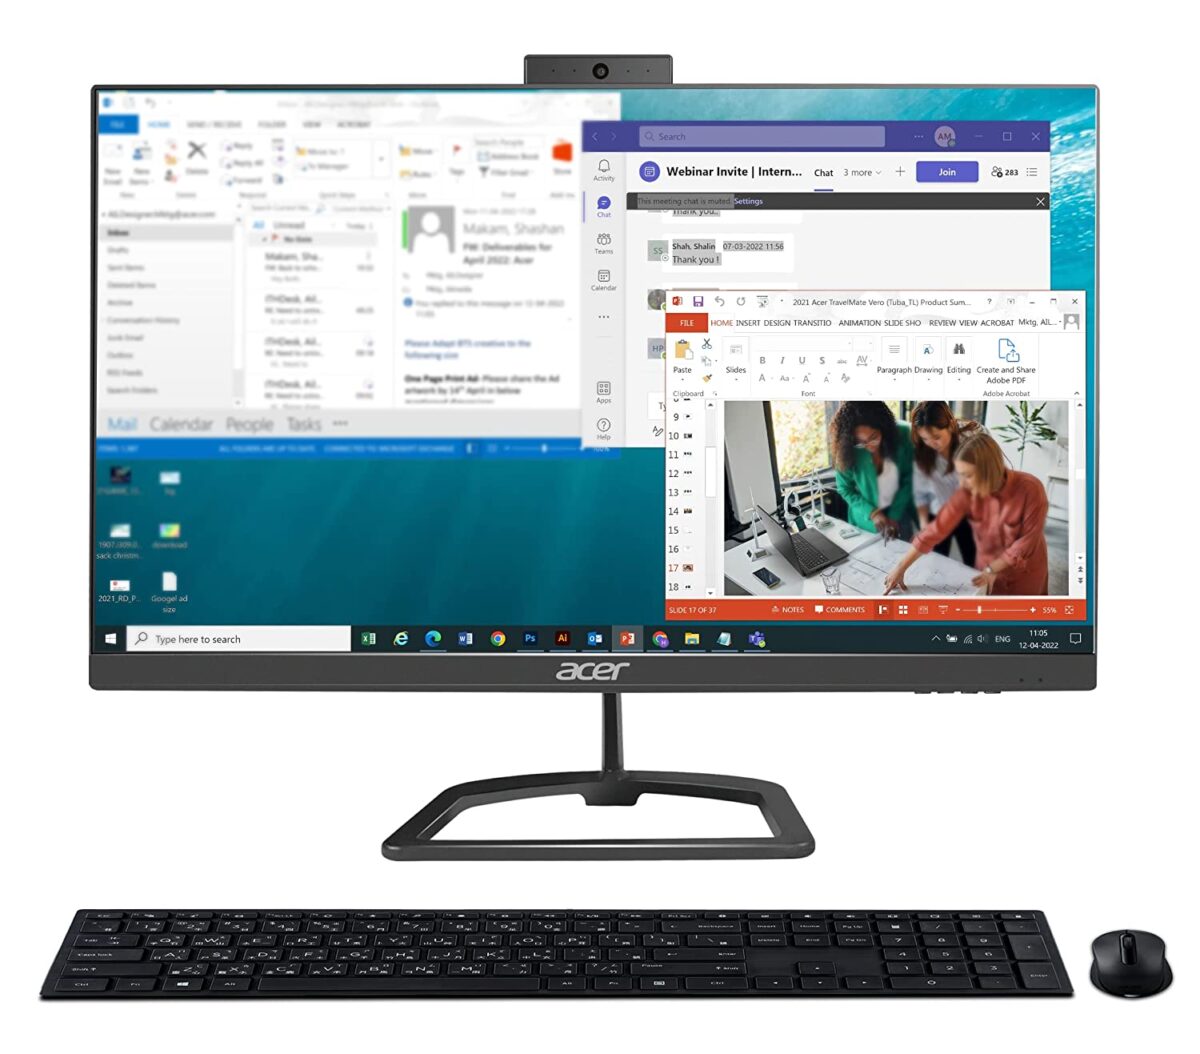 Acer Aspire C24 ‎UX.BGVSI.468 AIO Desktop listed on Amazon India | Check Price, Specs